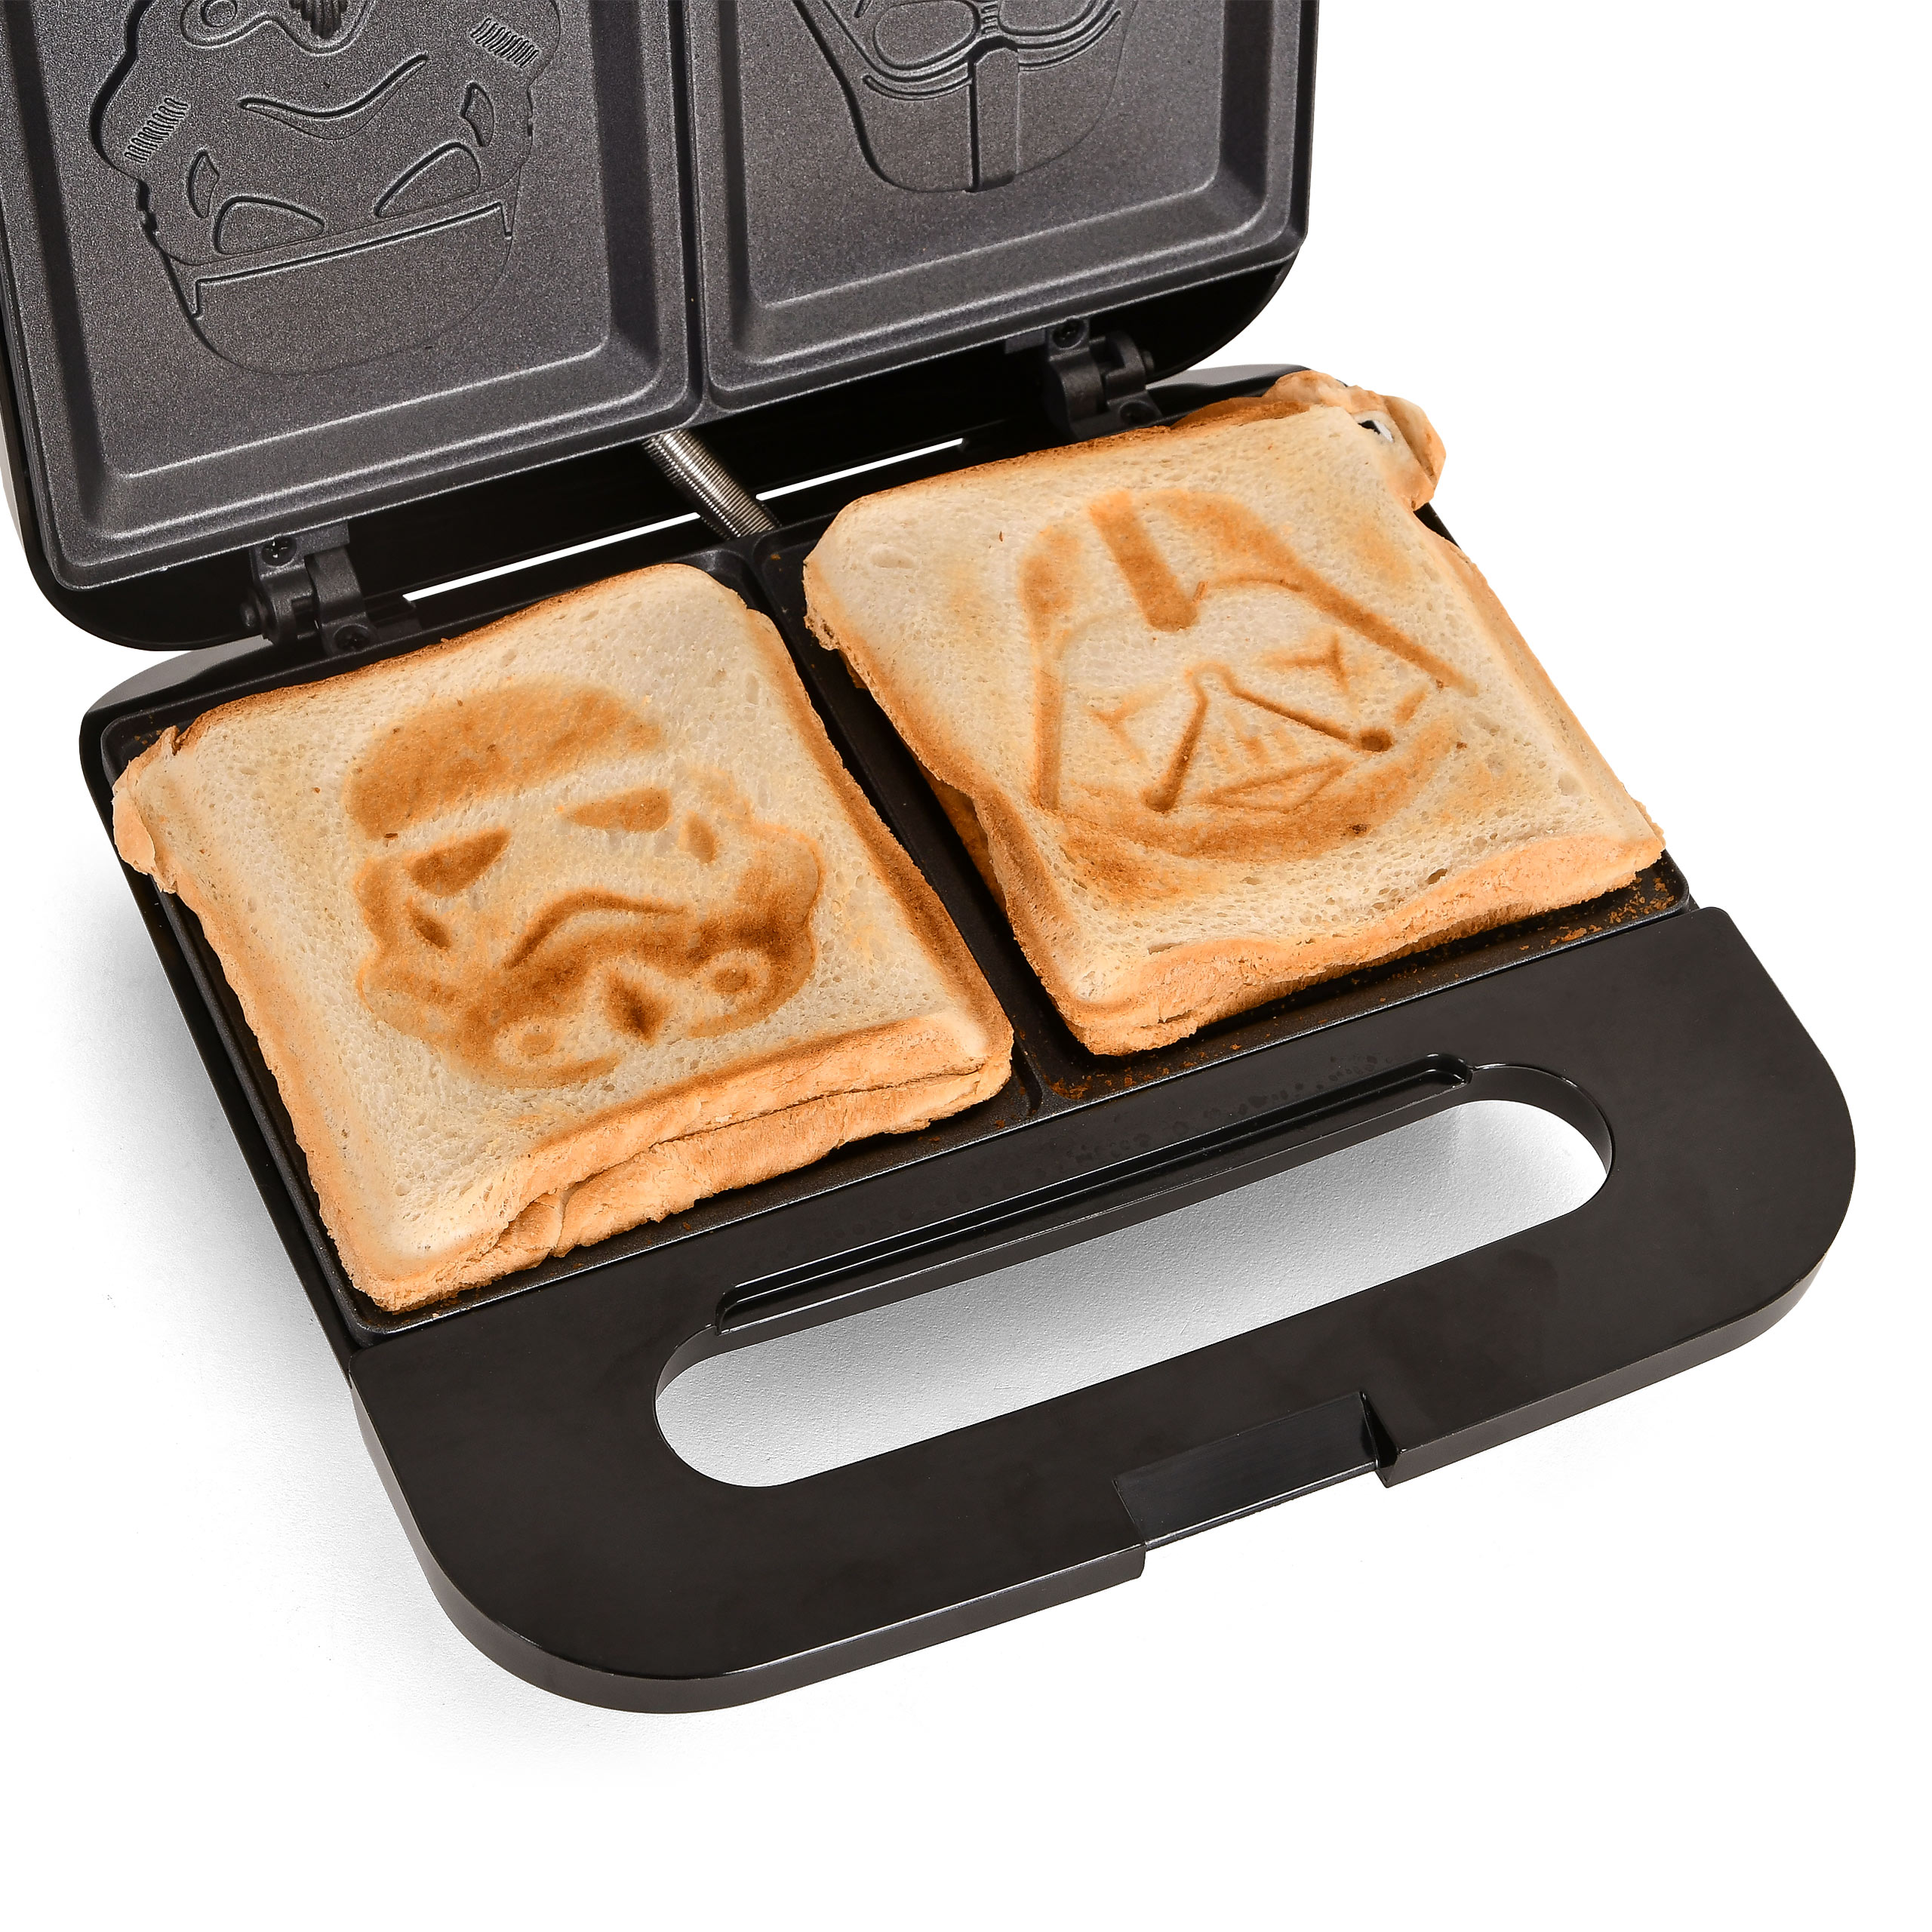 Star Wars - Darth Vader & Stormtrooper Sandwich Maker